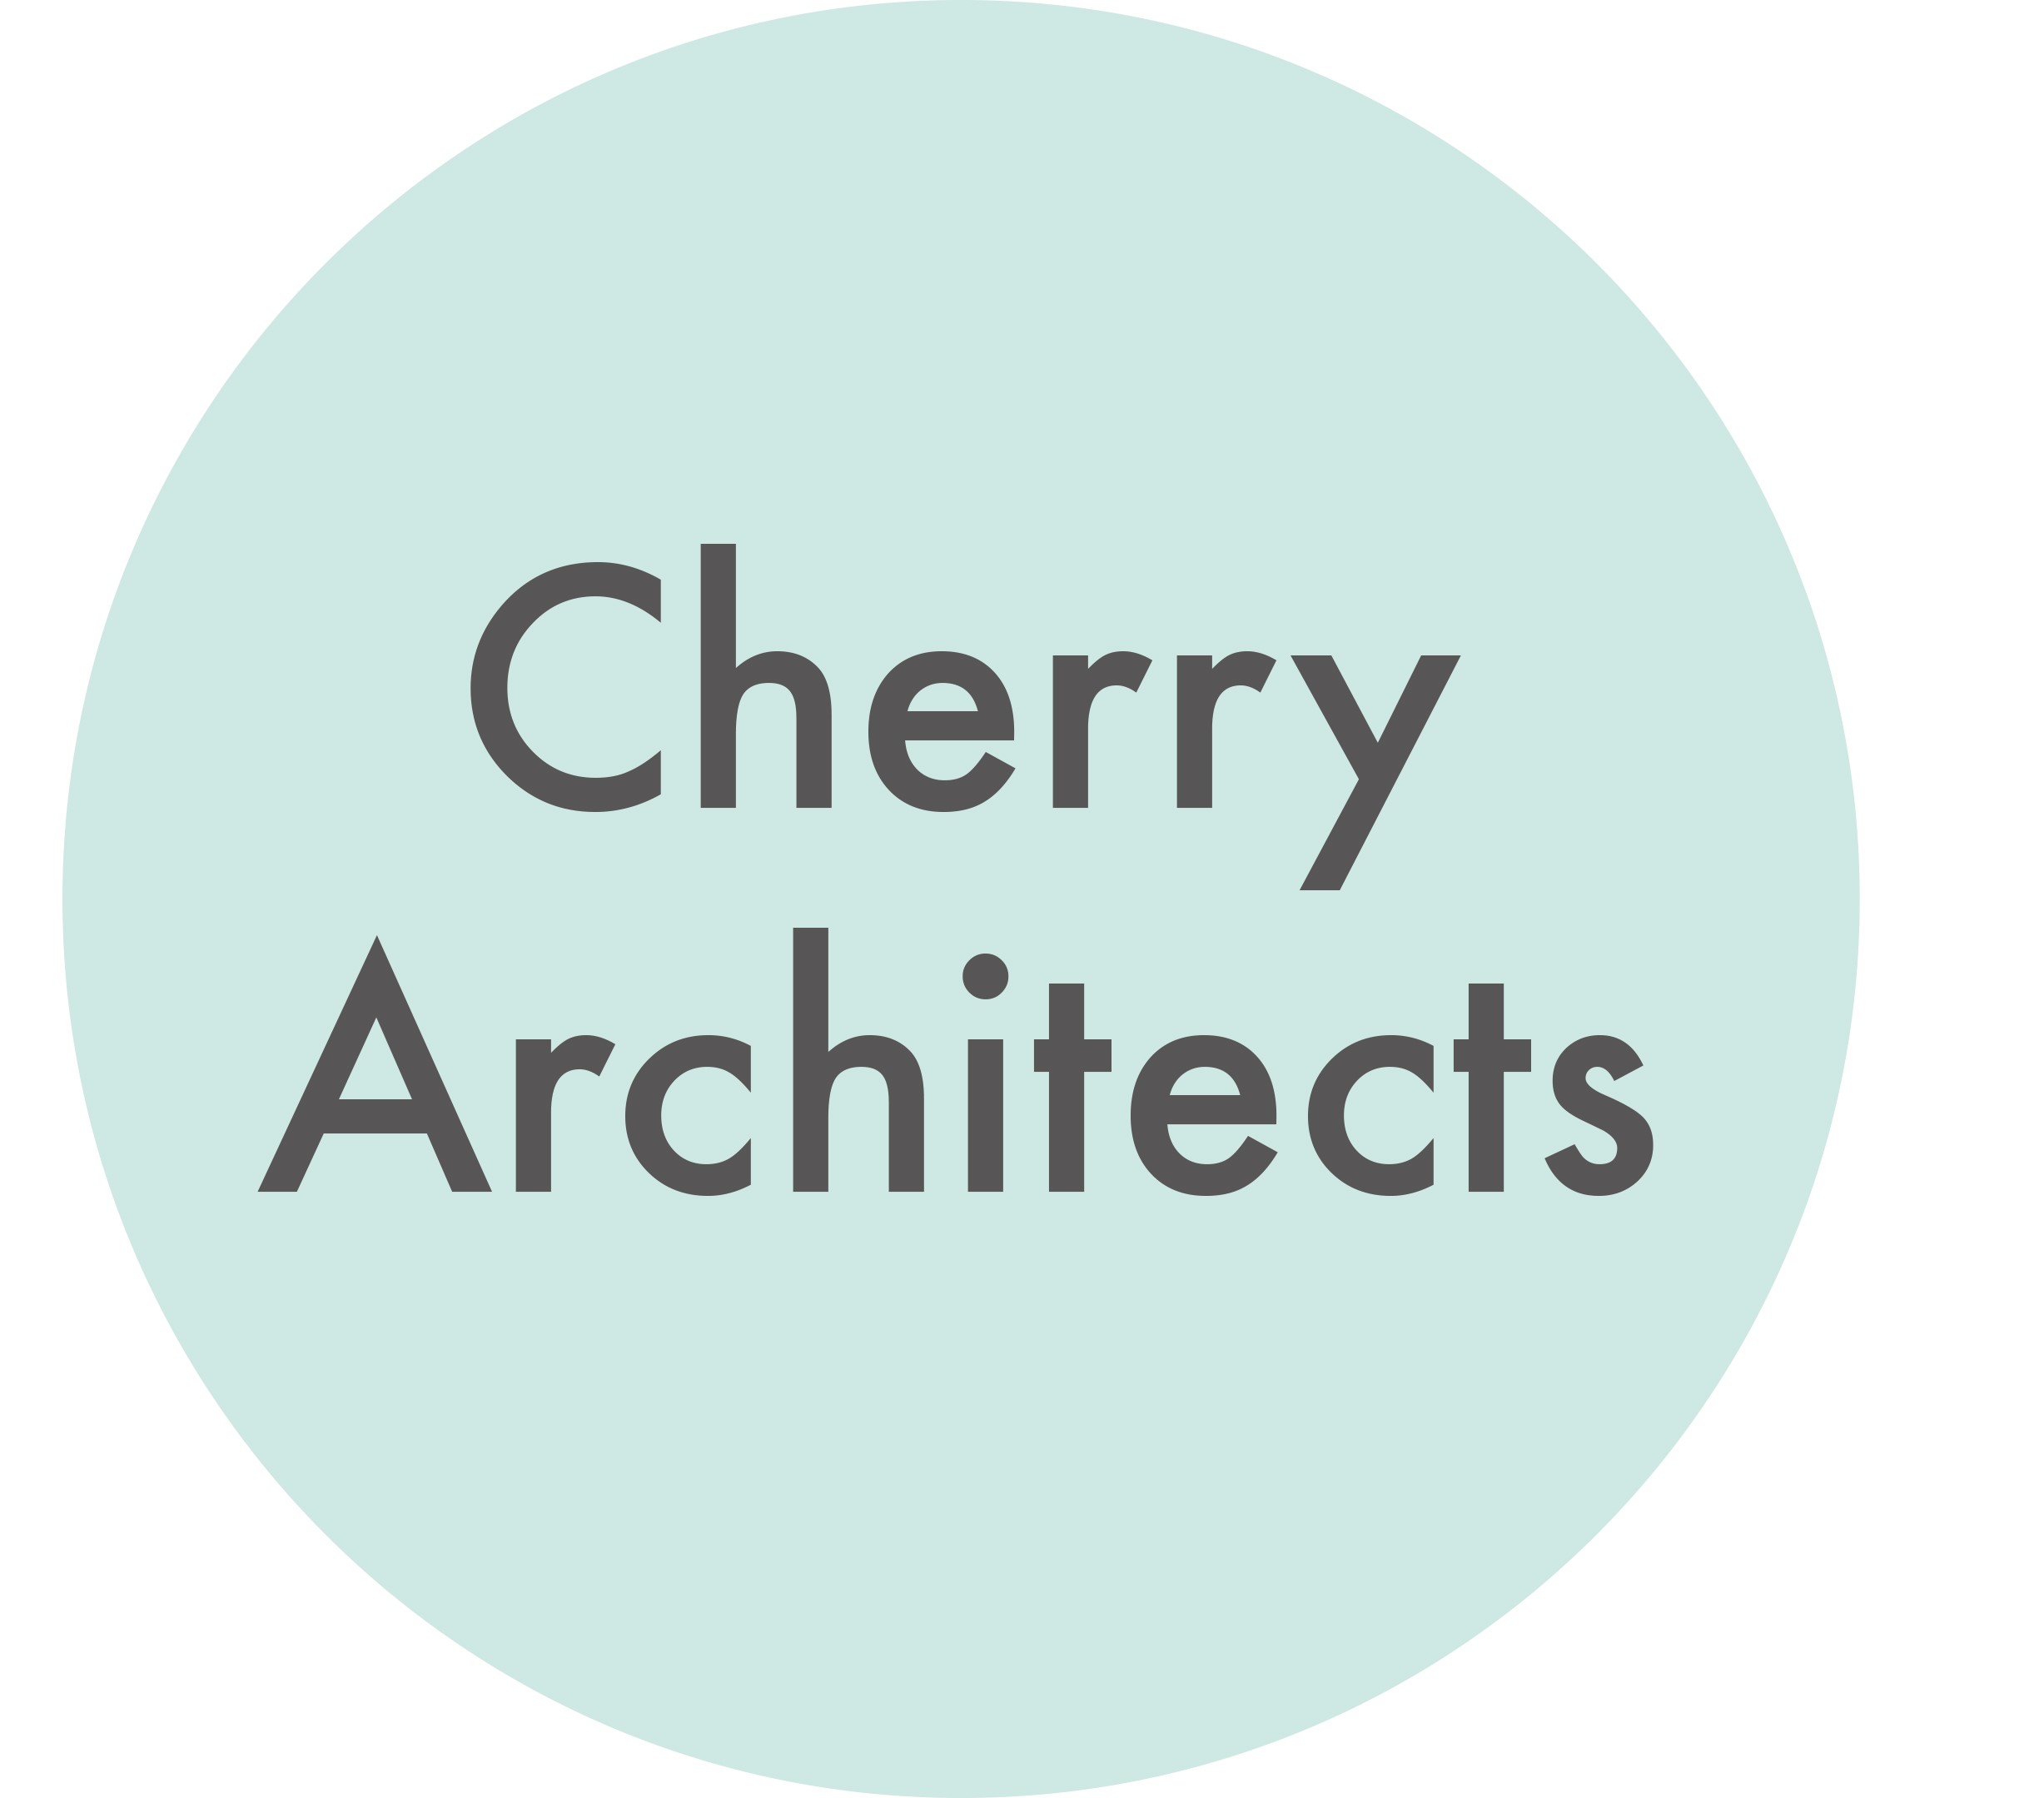 Cherry Architects